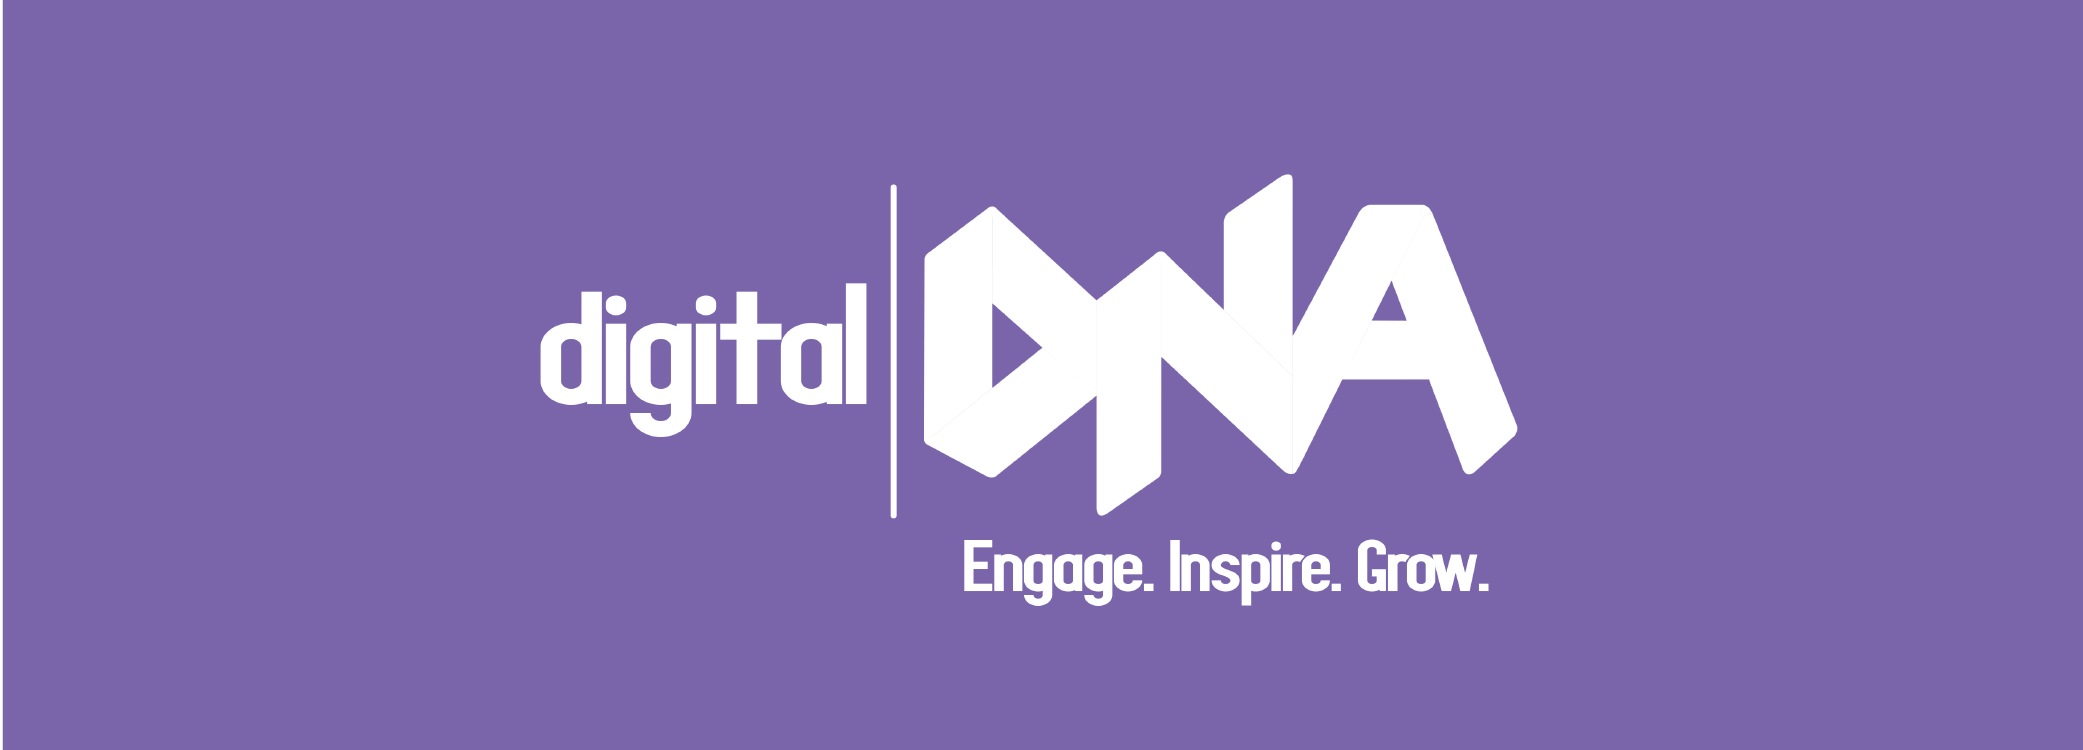 Driving Digital at Digital DNA Conference